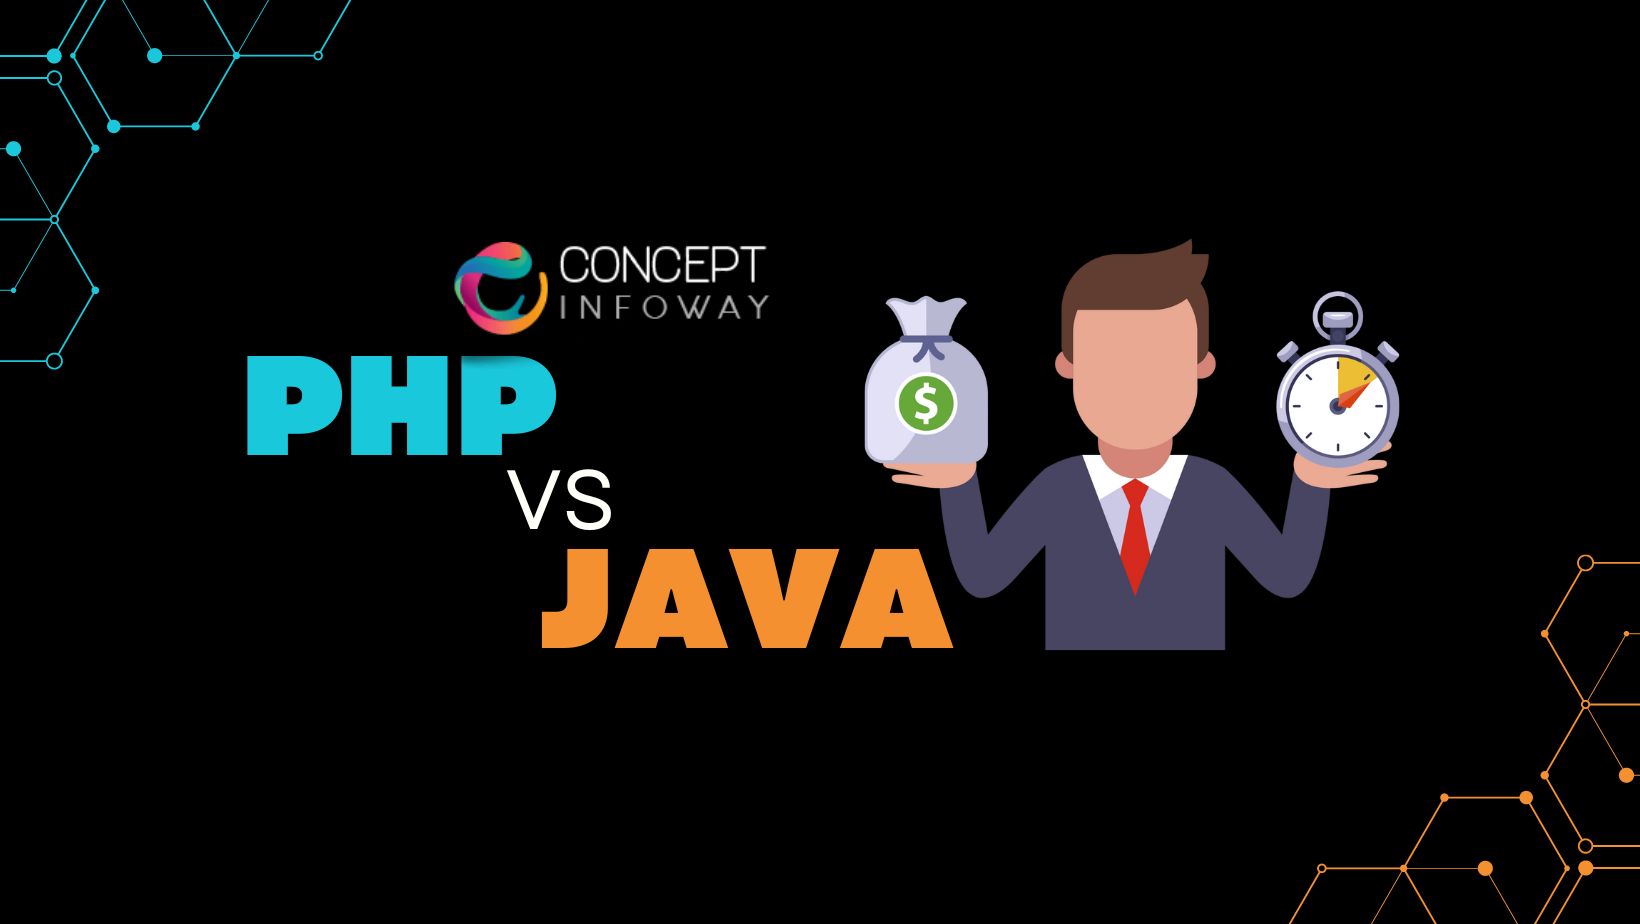 PHP vs JAVA - Concept Infoway